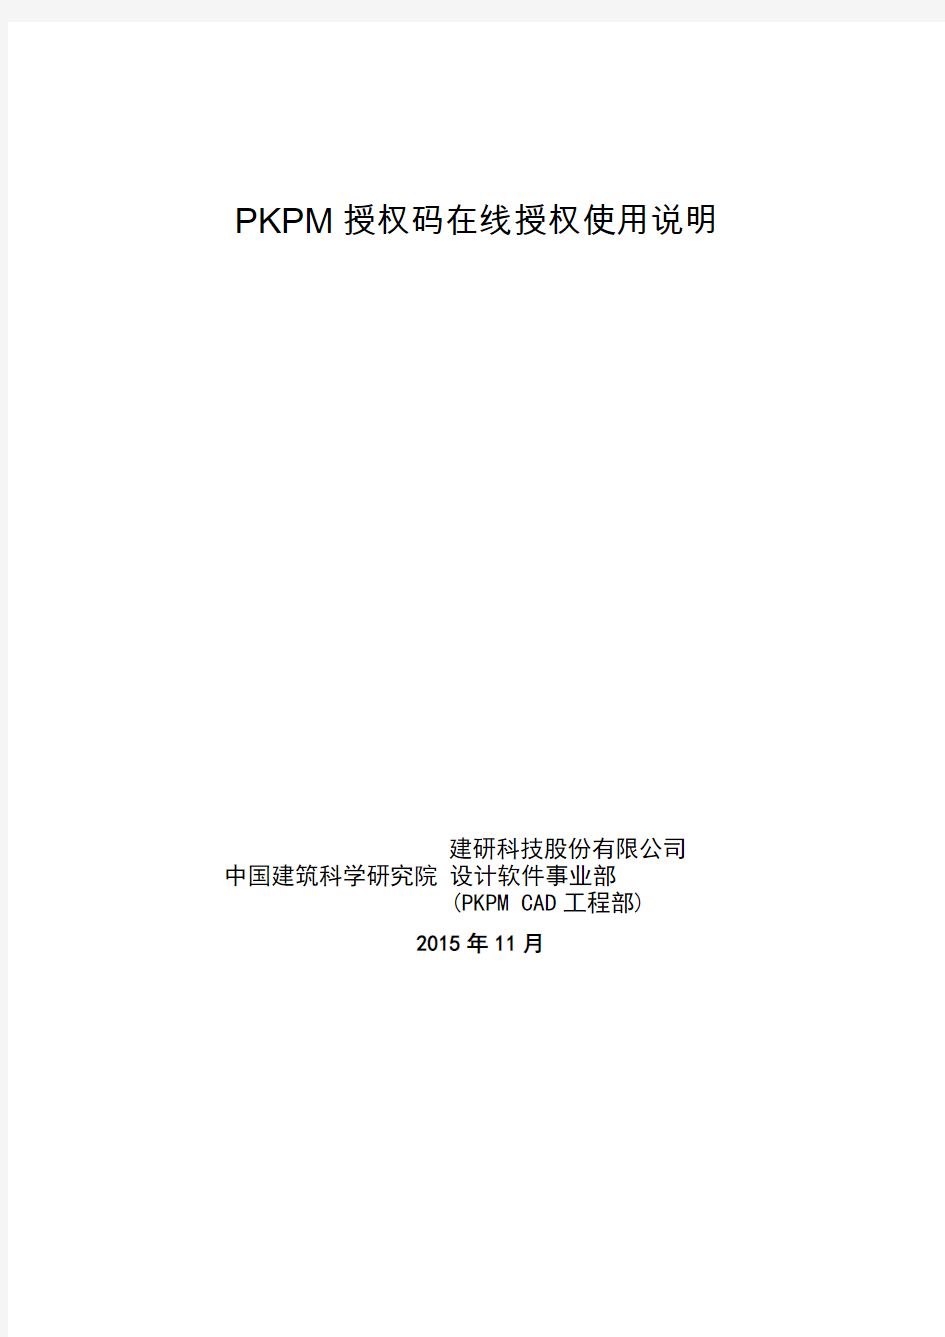 PKPM授权码在线授权使用说明